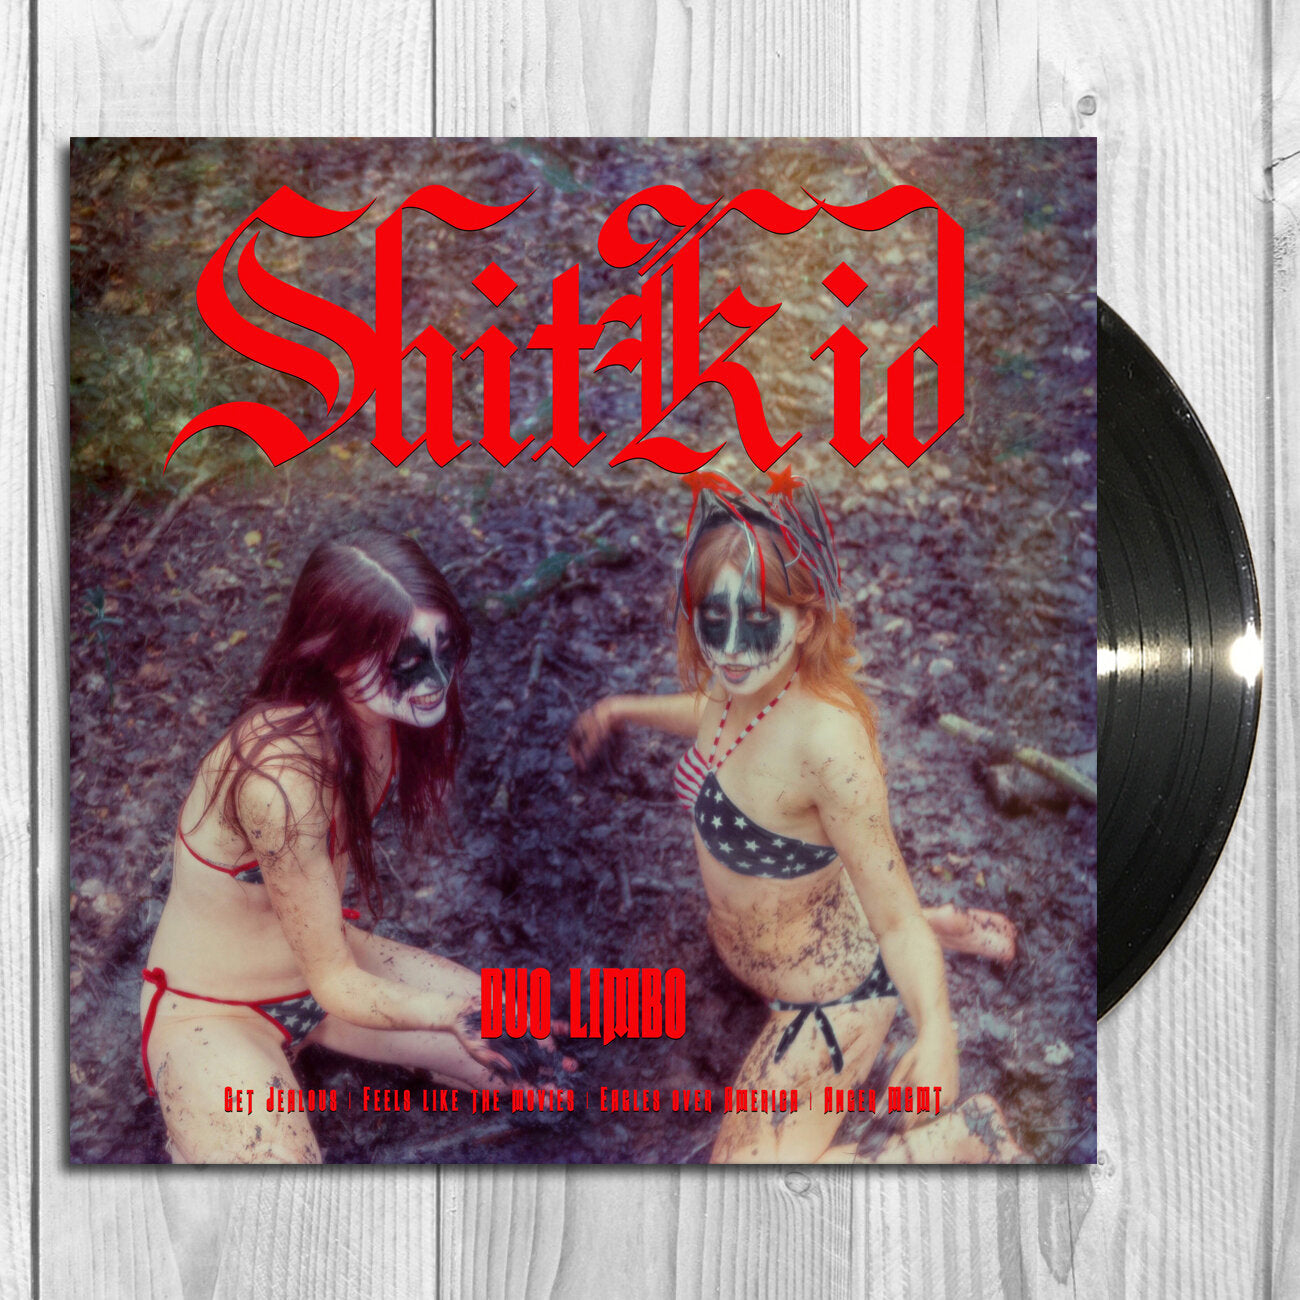 ShitKid - Duo Limbo / "Mellan himmel å helvete” LP